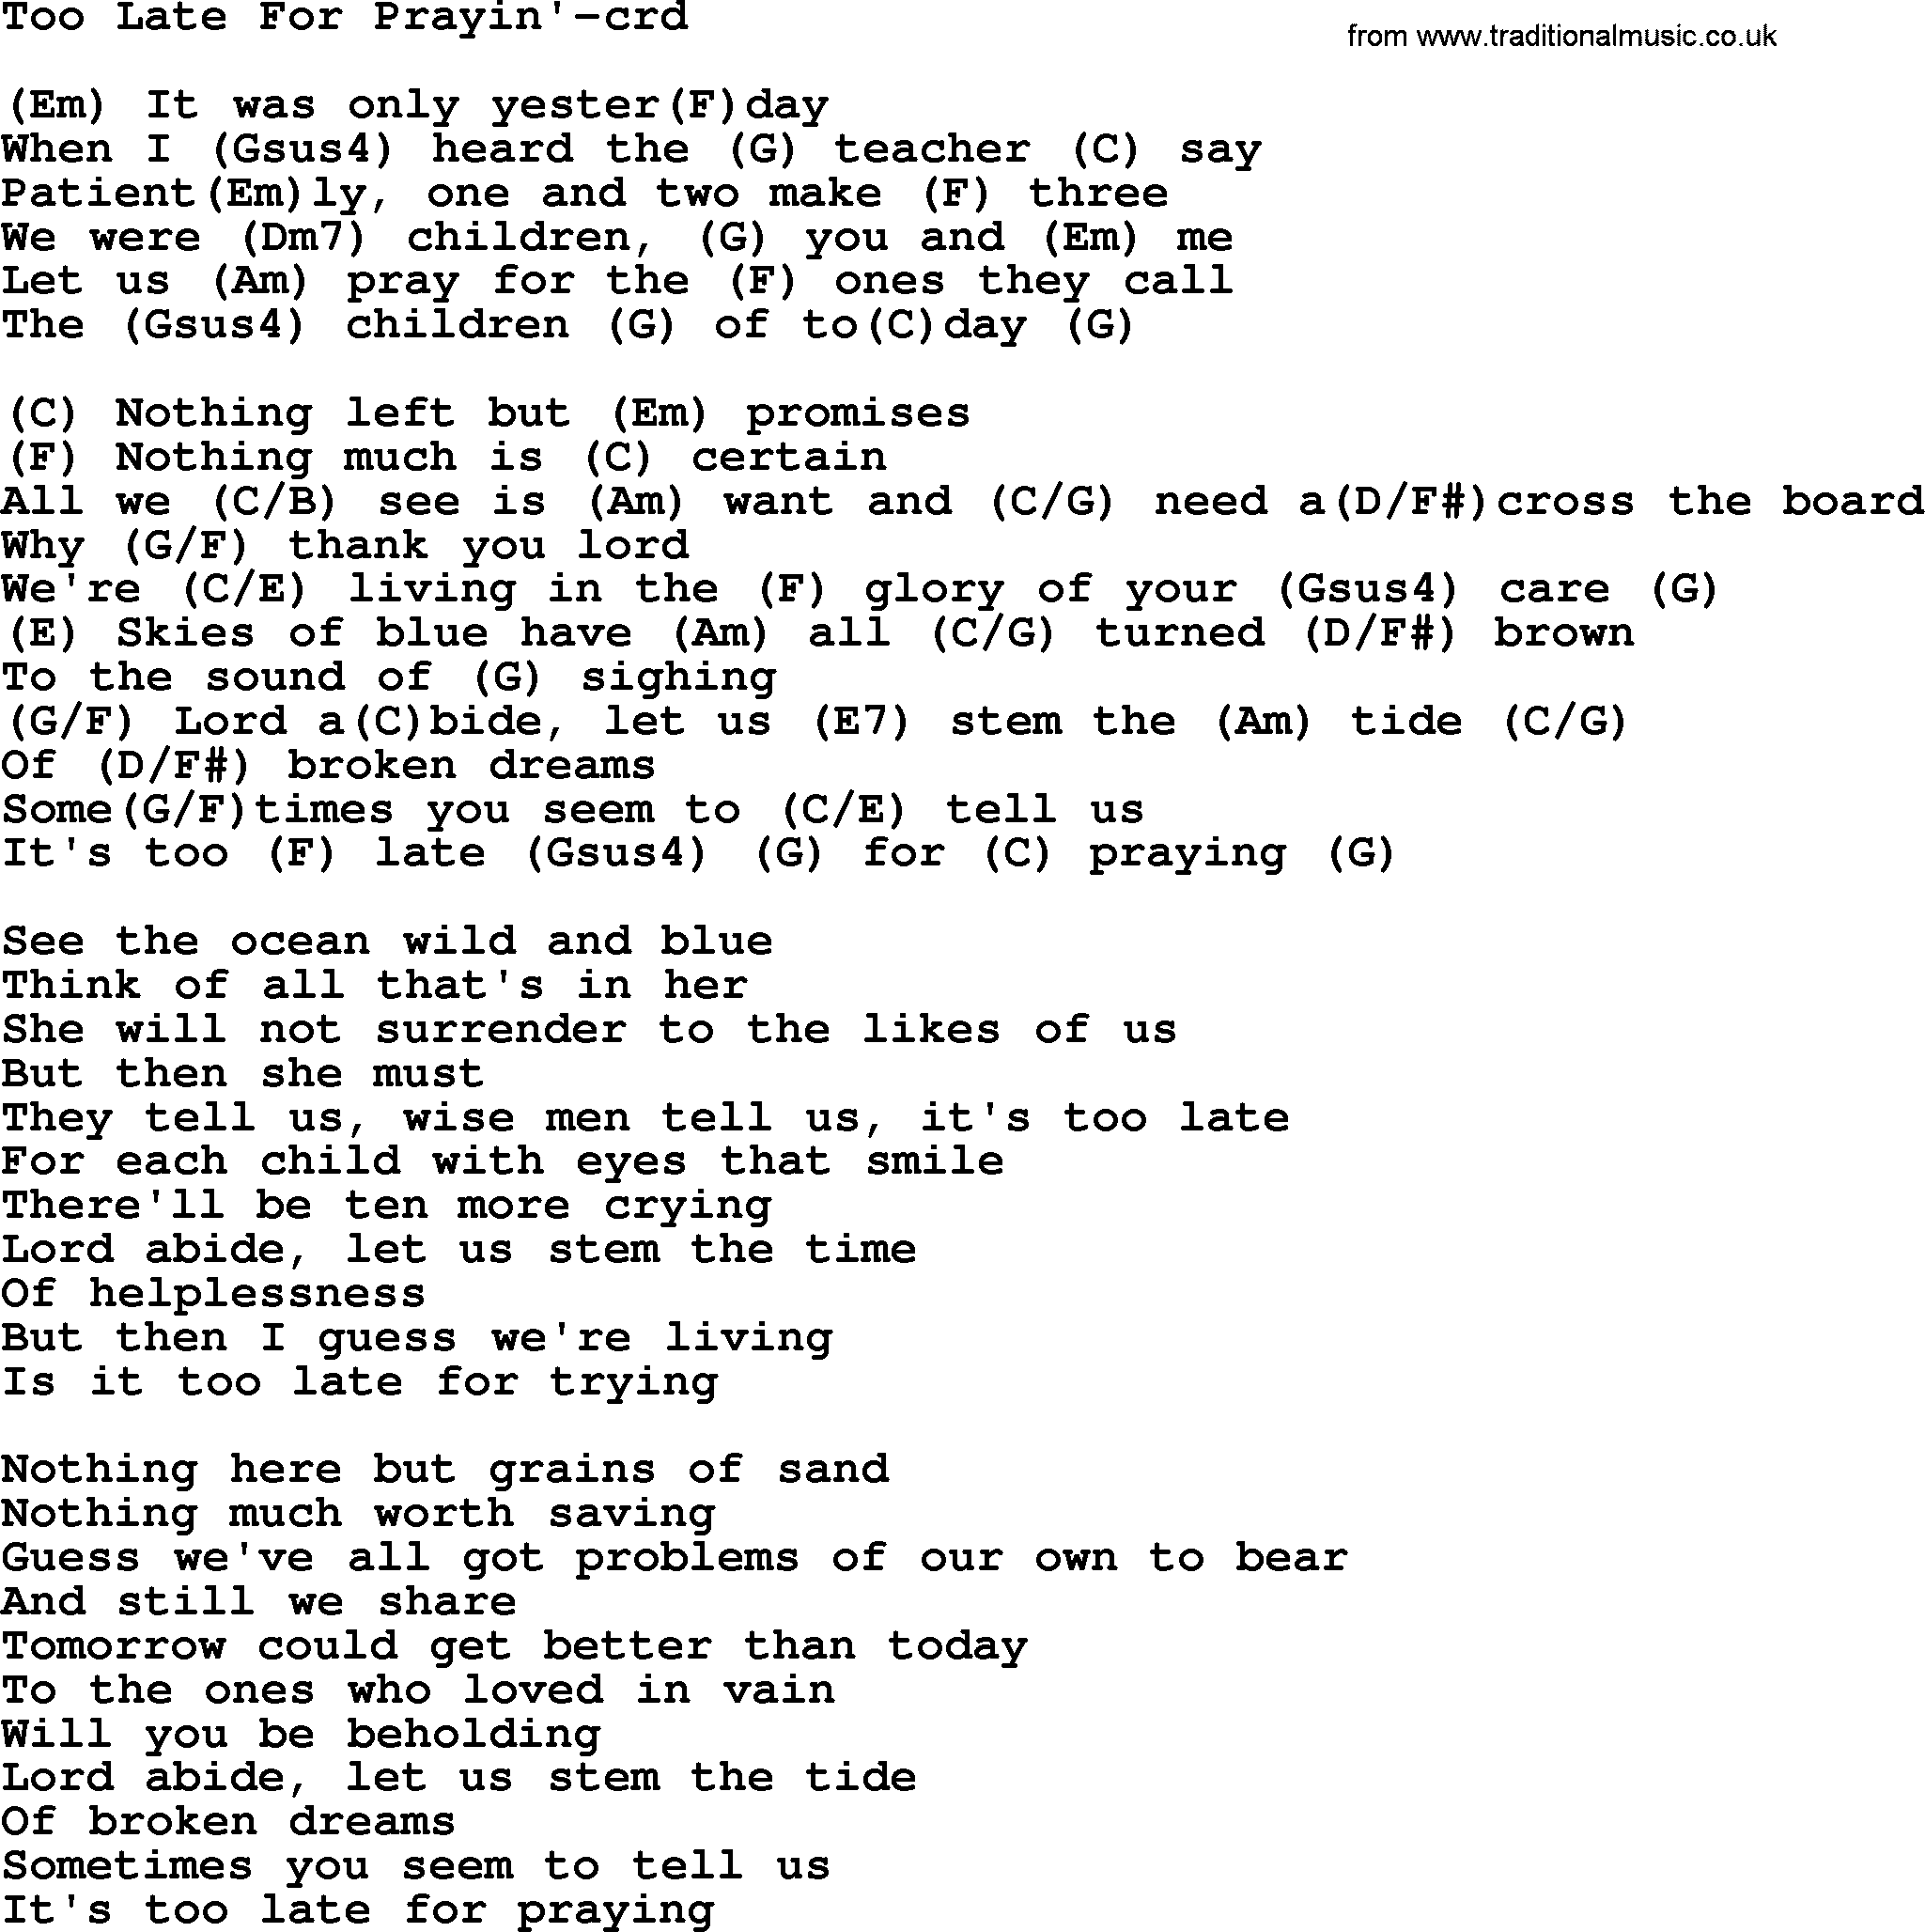 Gordon Lightfoot song Too Late For Prayin', lyrics and chords